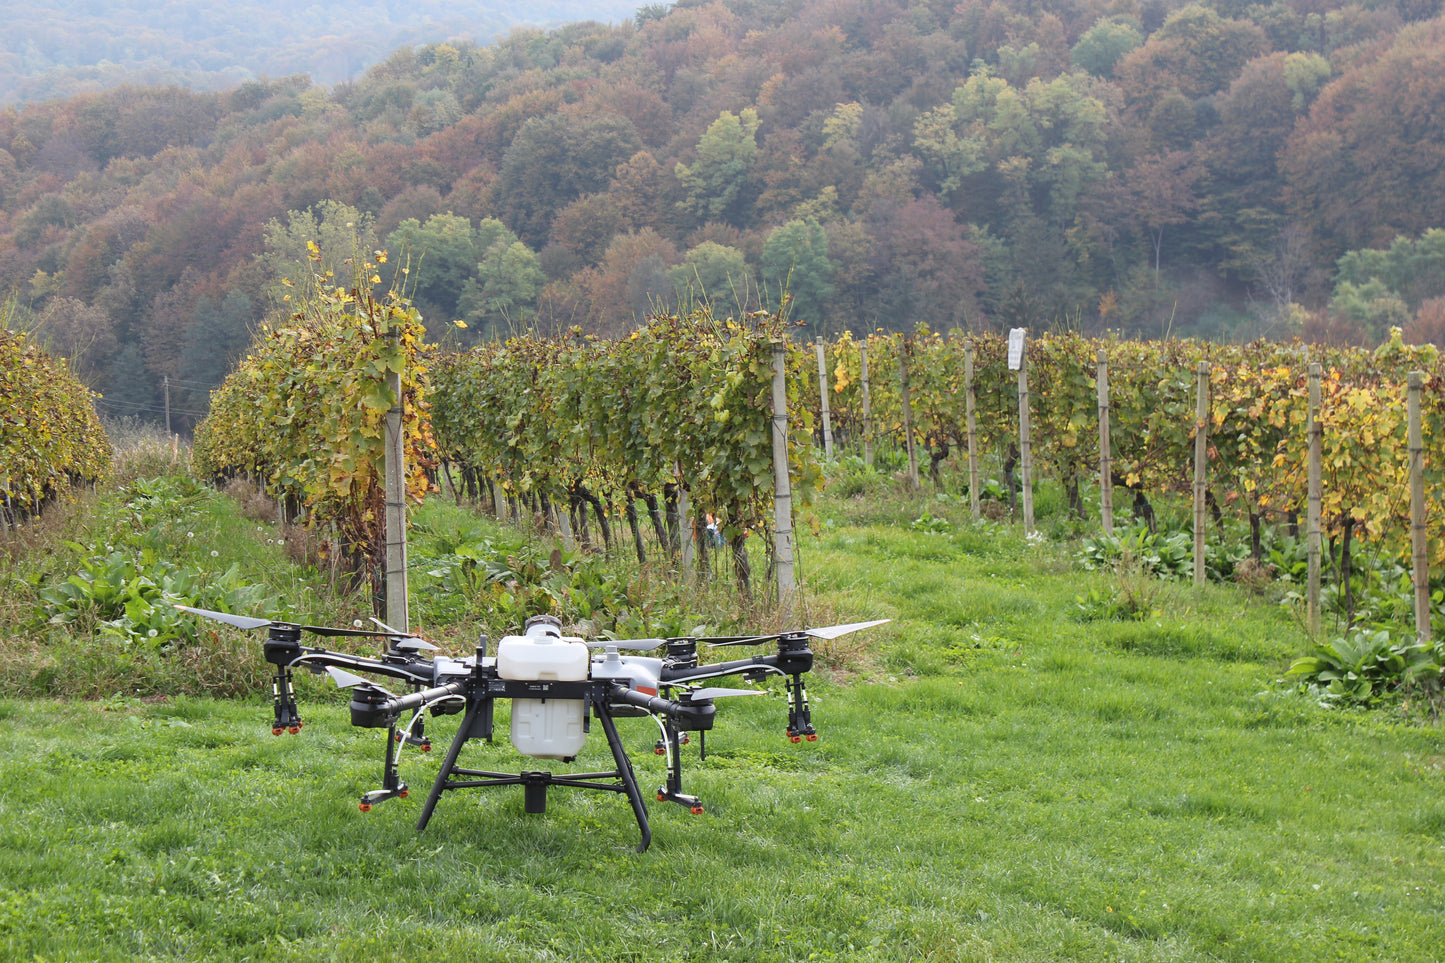 Obuka za poljoprivredne dronove: unaprijedite svoje poljoprivredne prakse